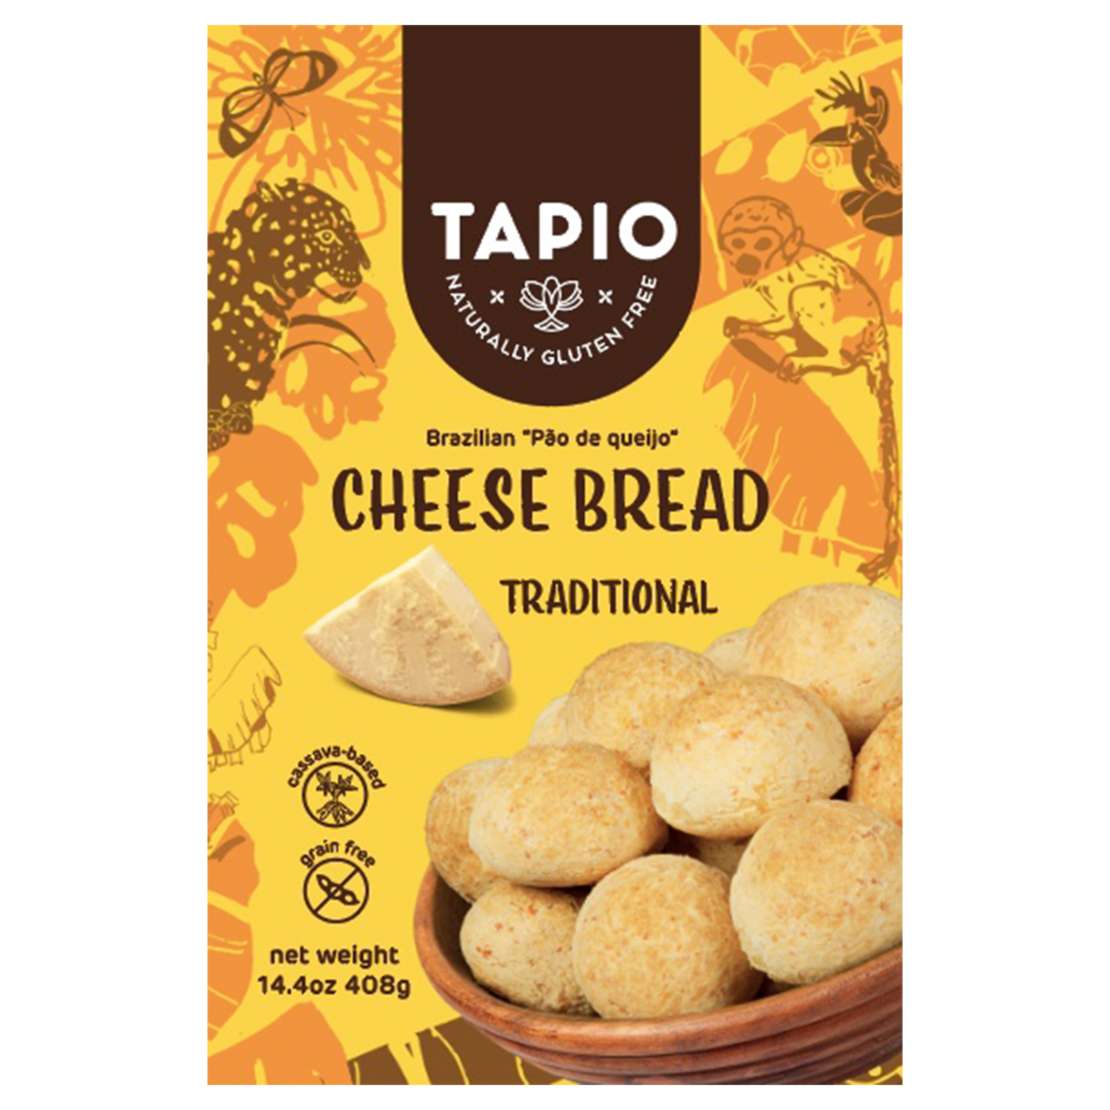 Tapio cheese bread